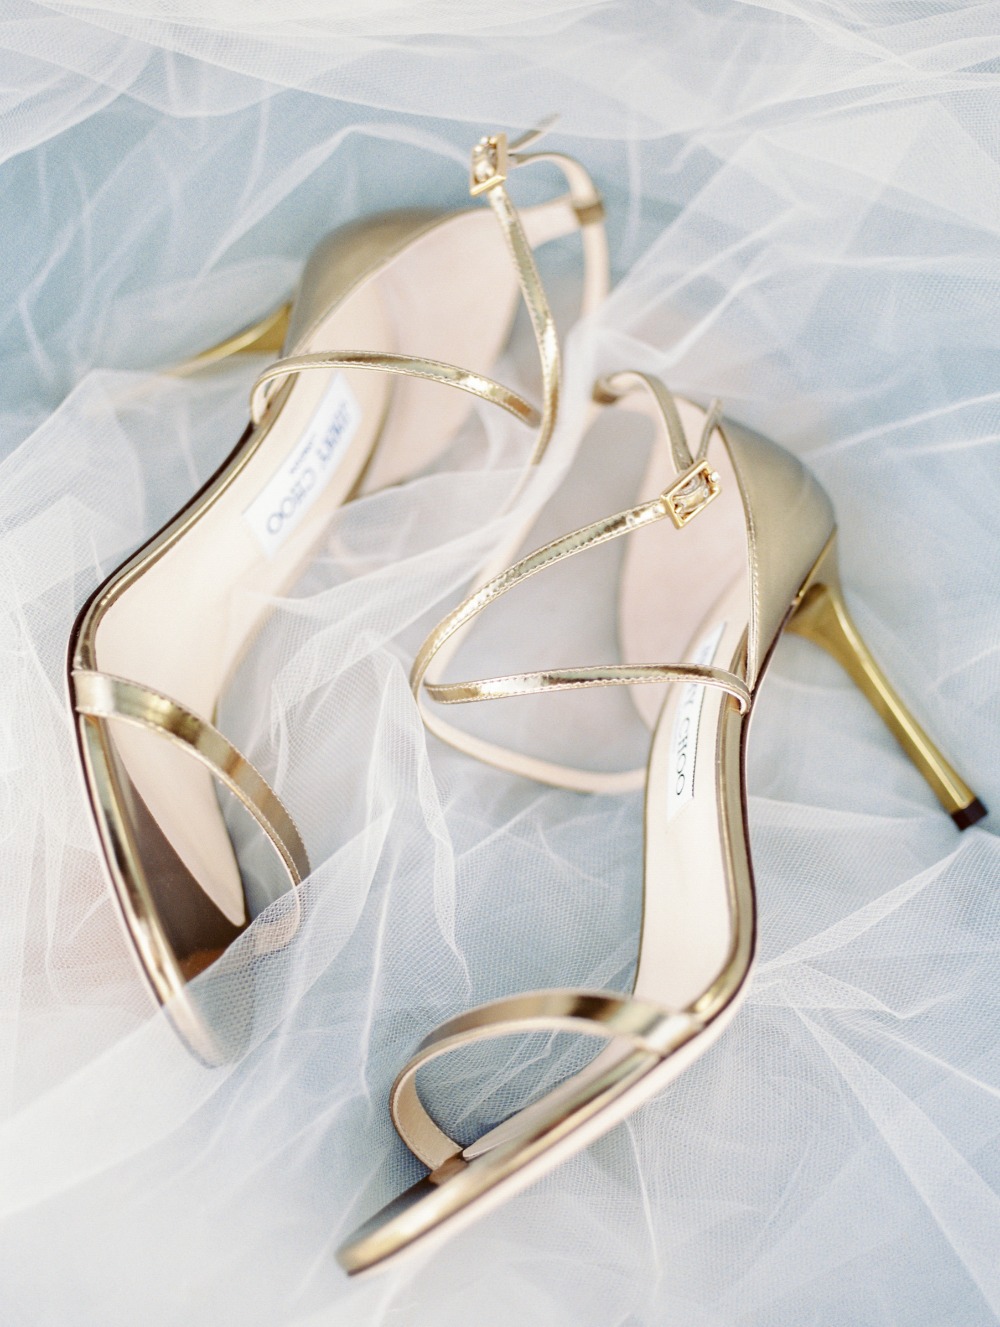 Gold Jimmy Choo heels